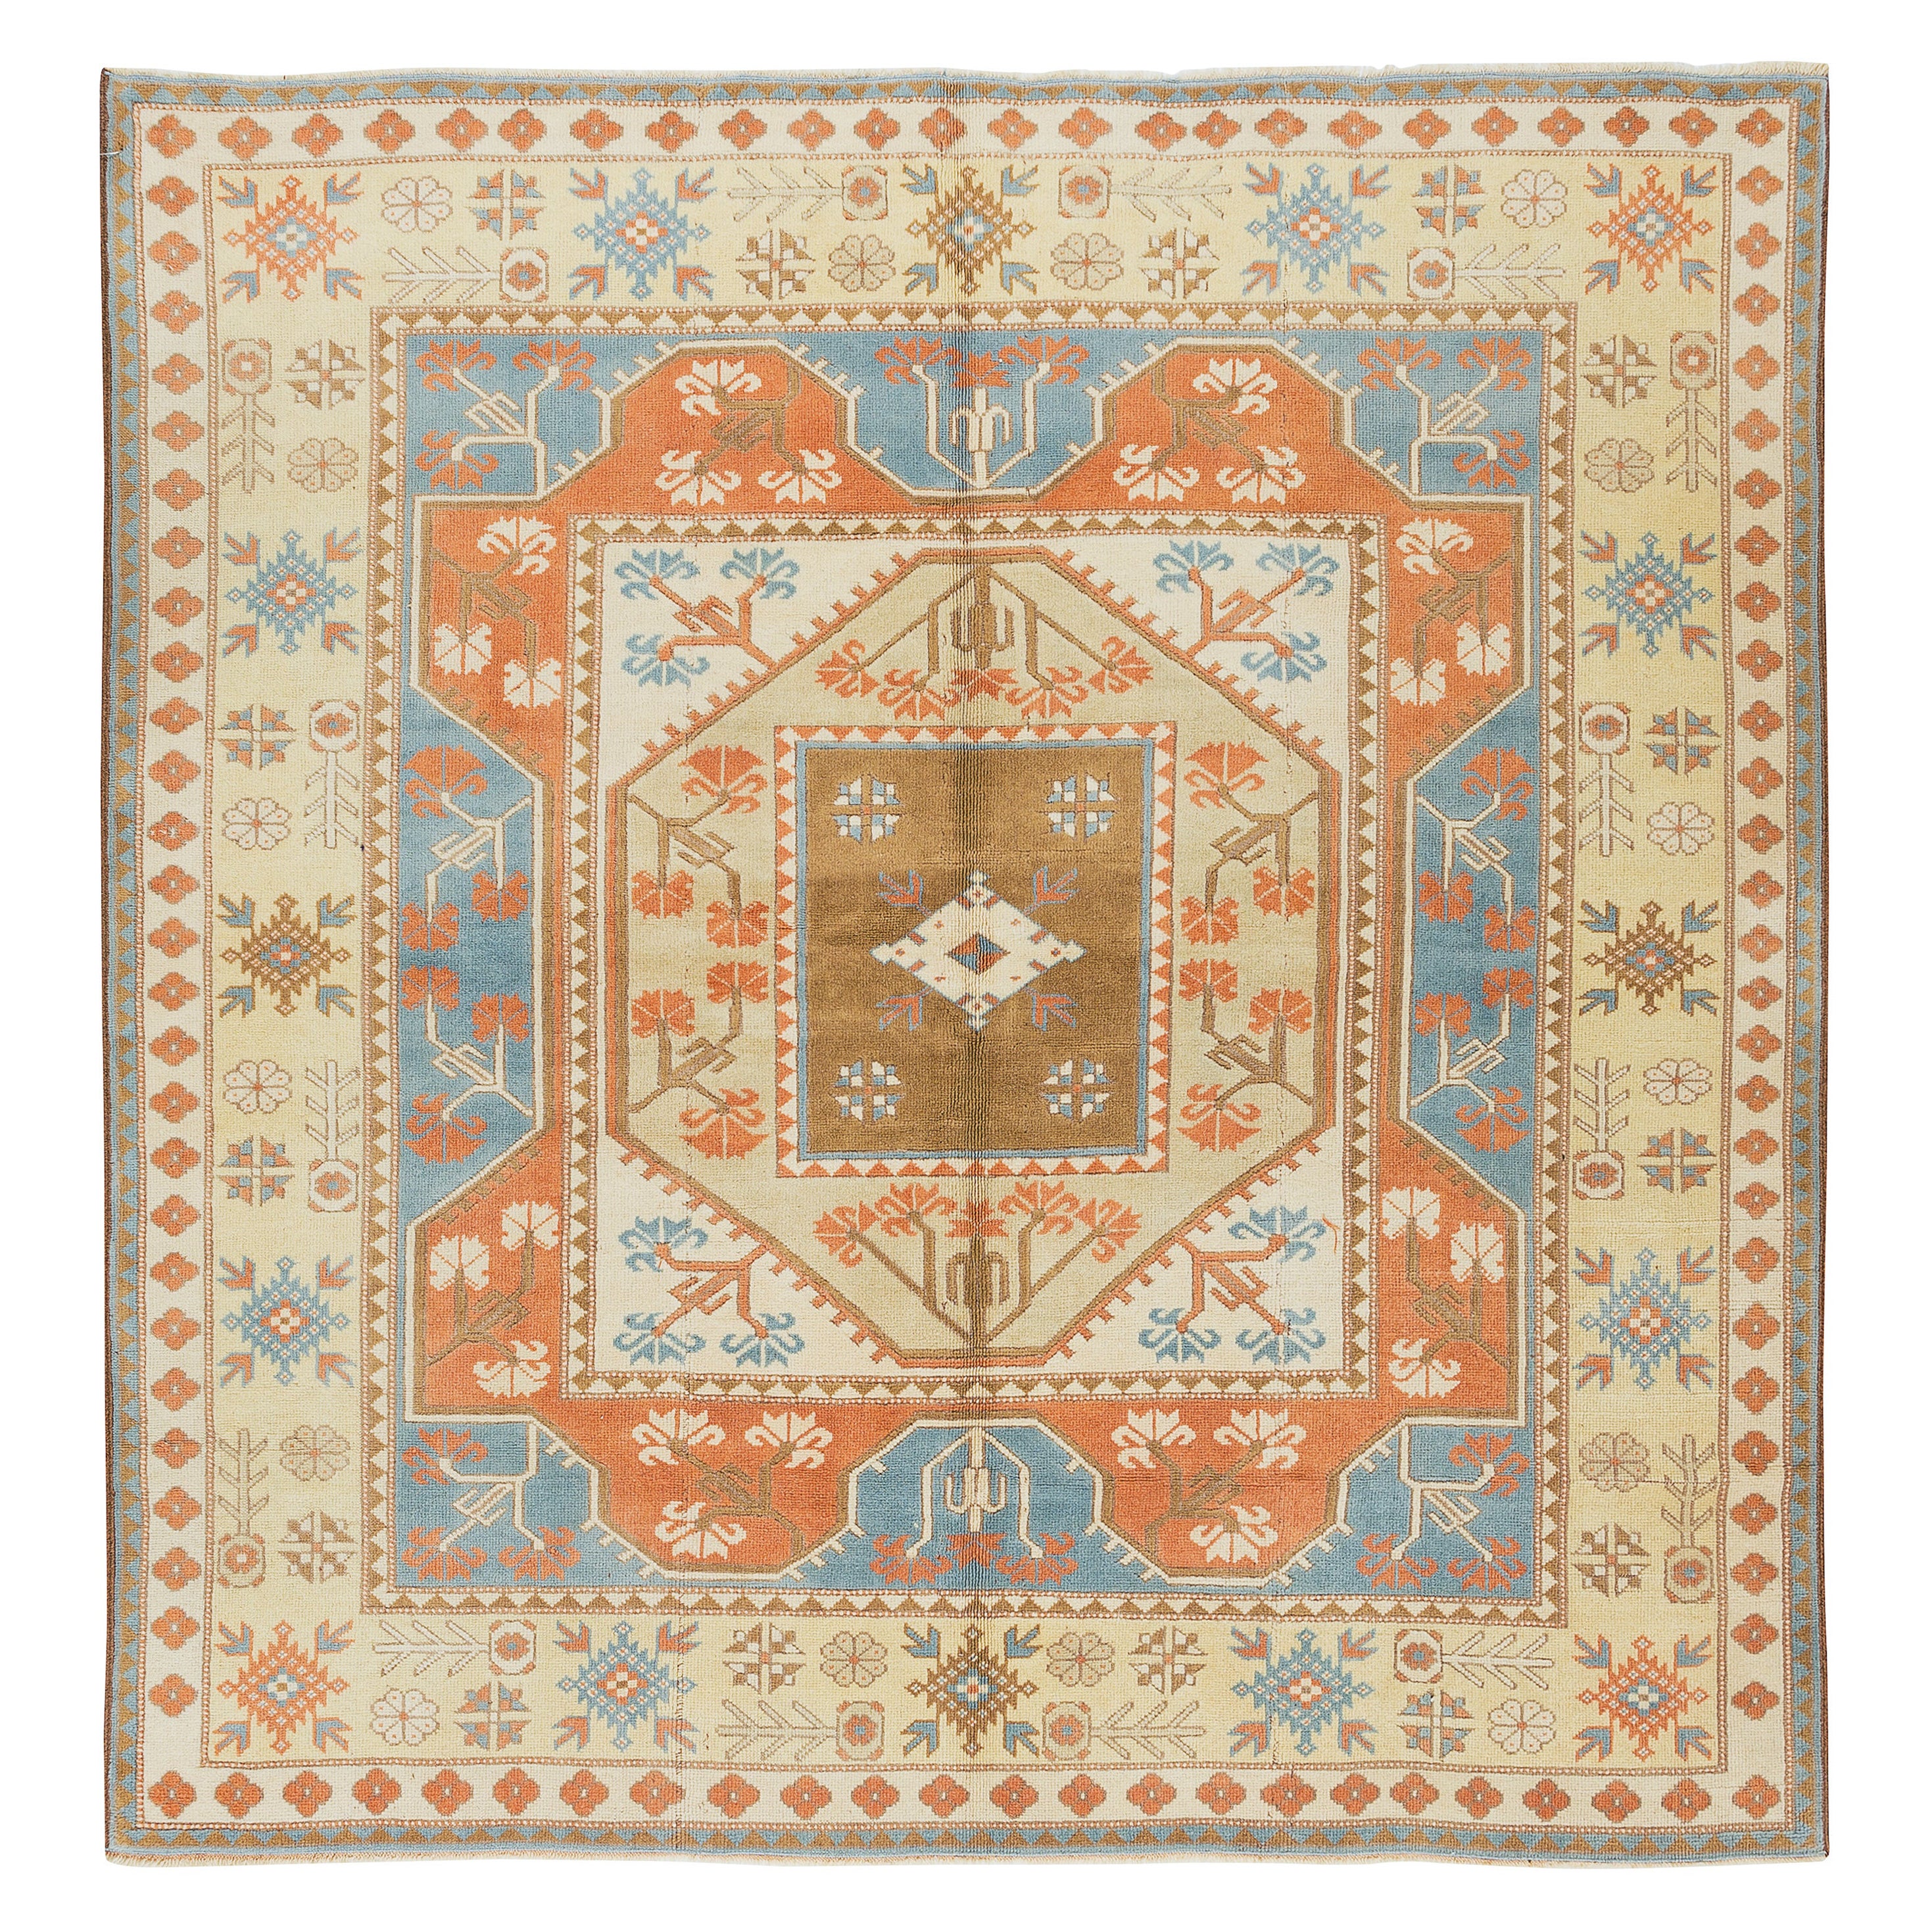 6.5x6.6 Ft Rare Size Handmade Turkish Rug, Vintage Geometric Unique Carpet